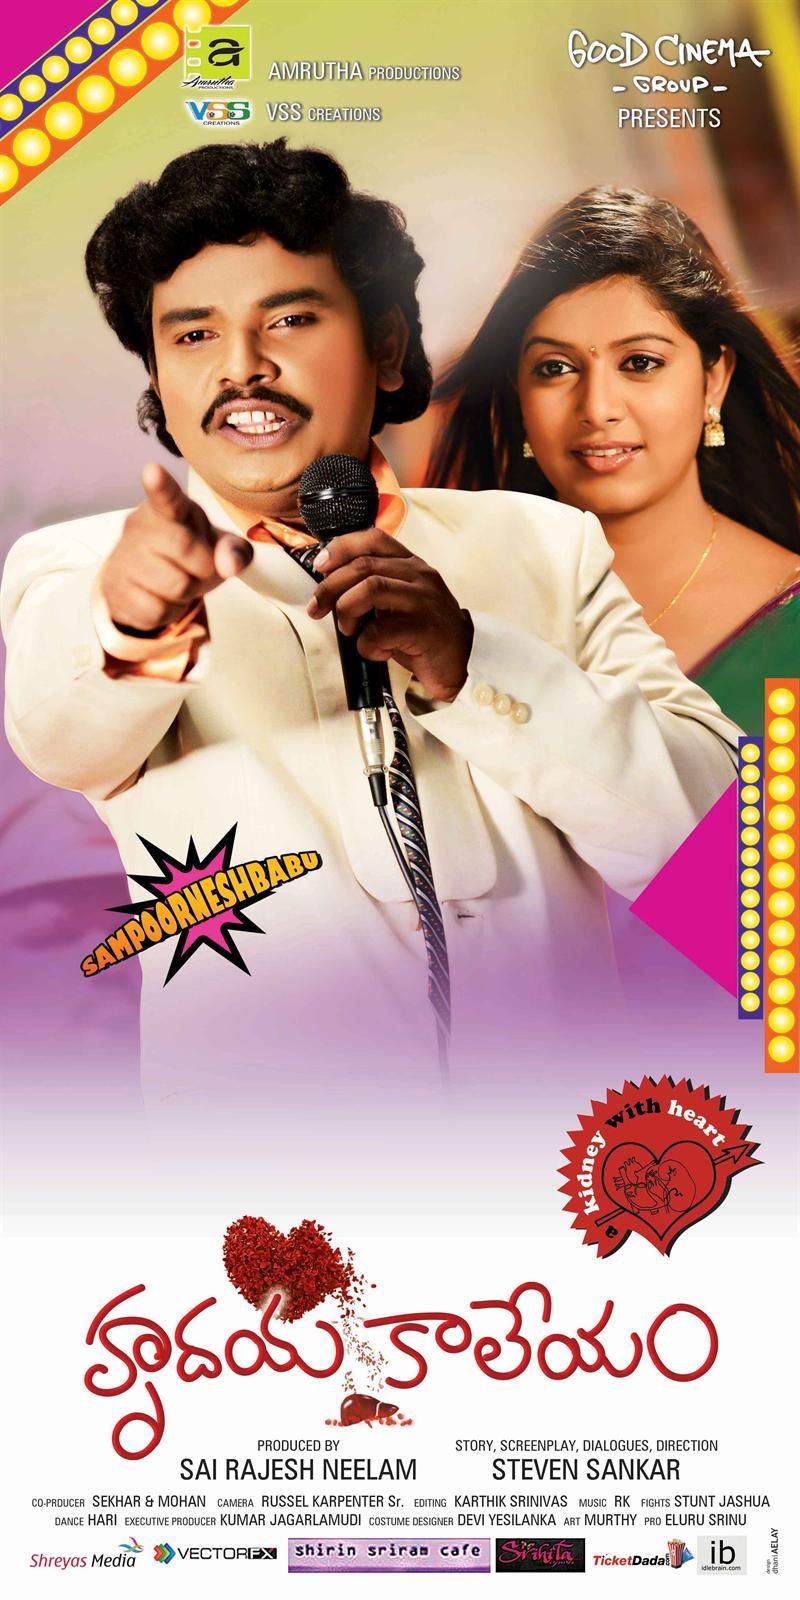 Hrudaya Kaleyam Movie Latest Posters